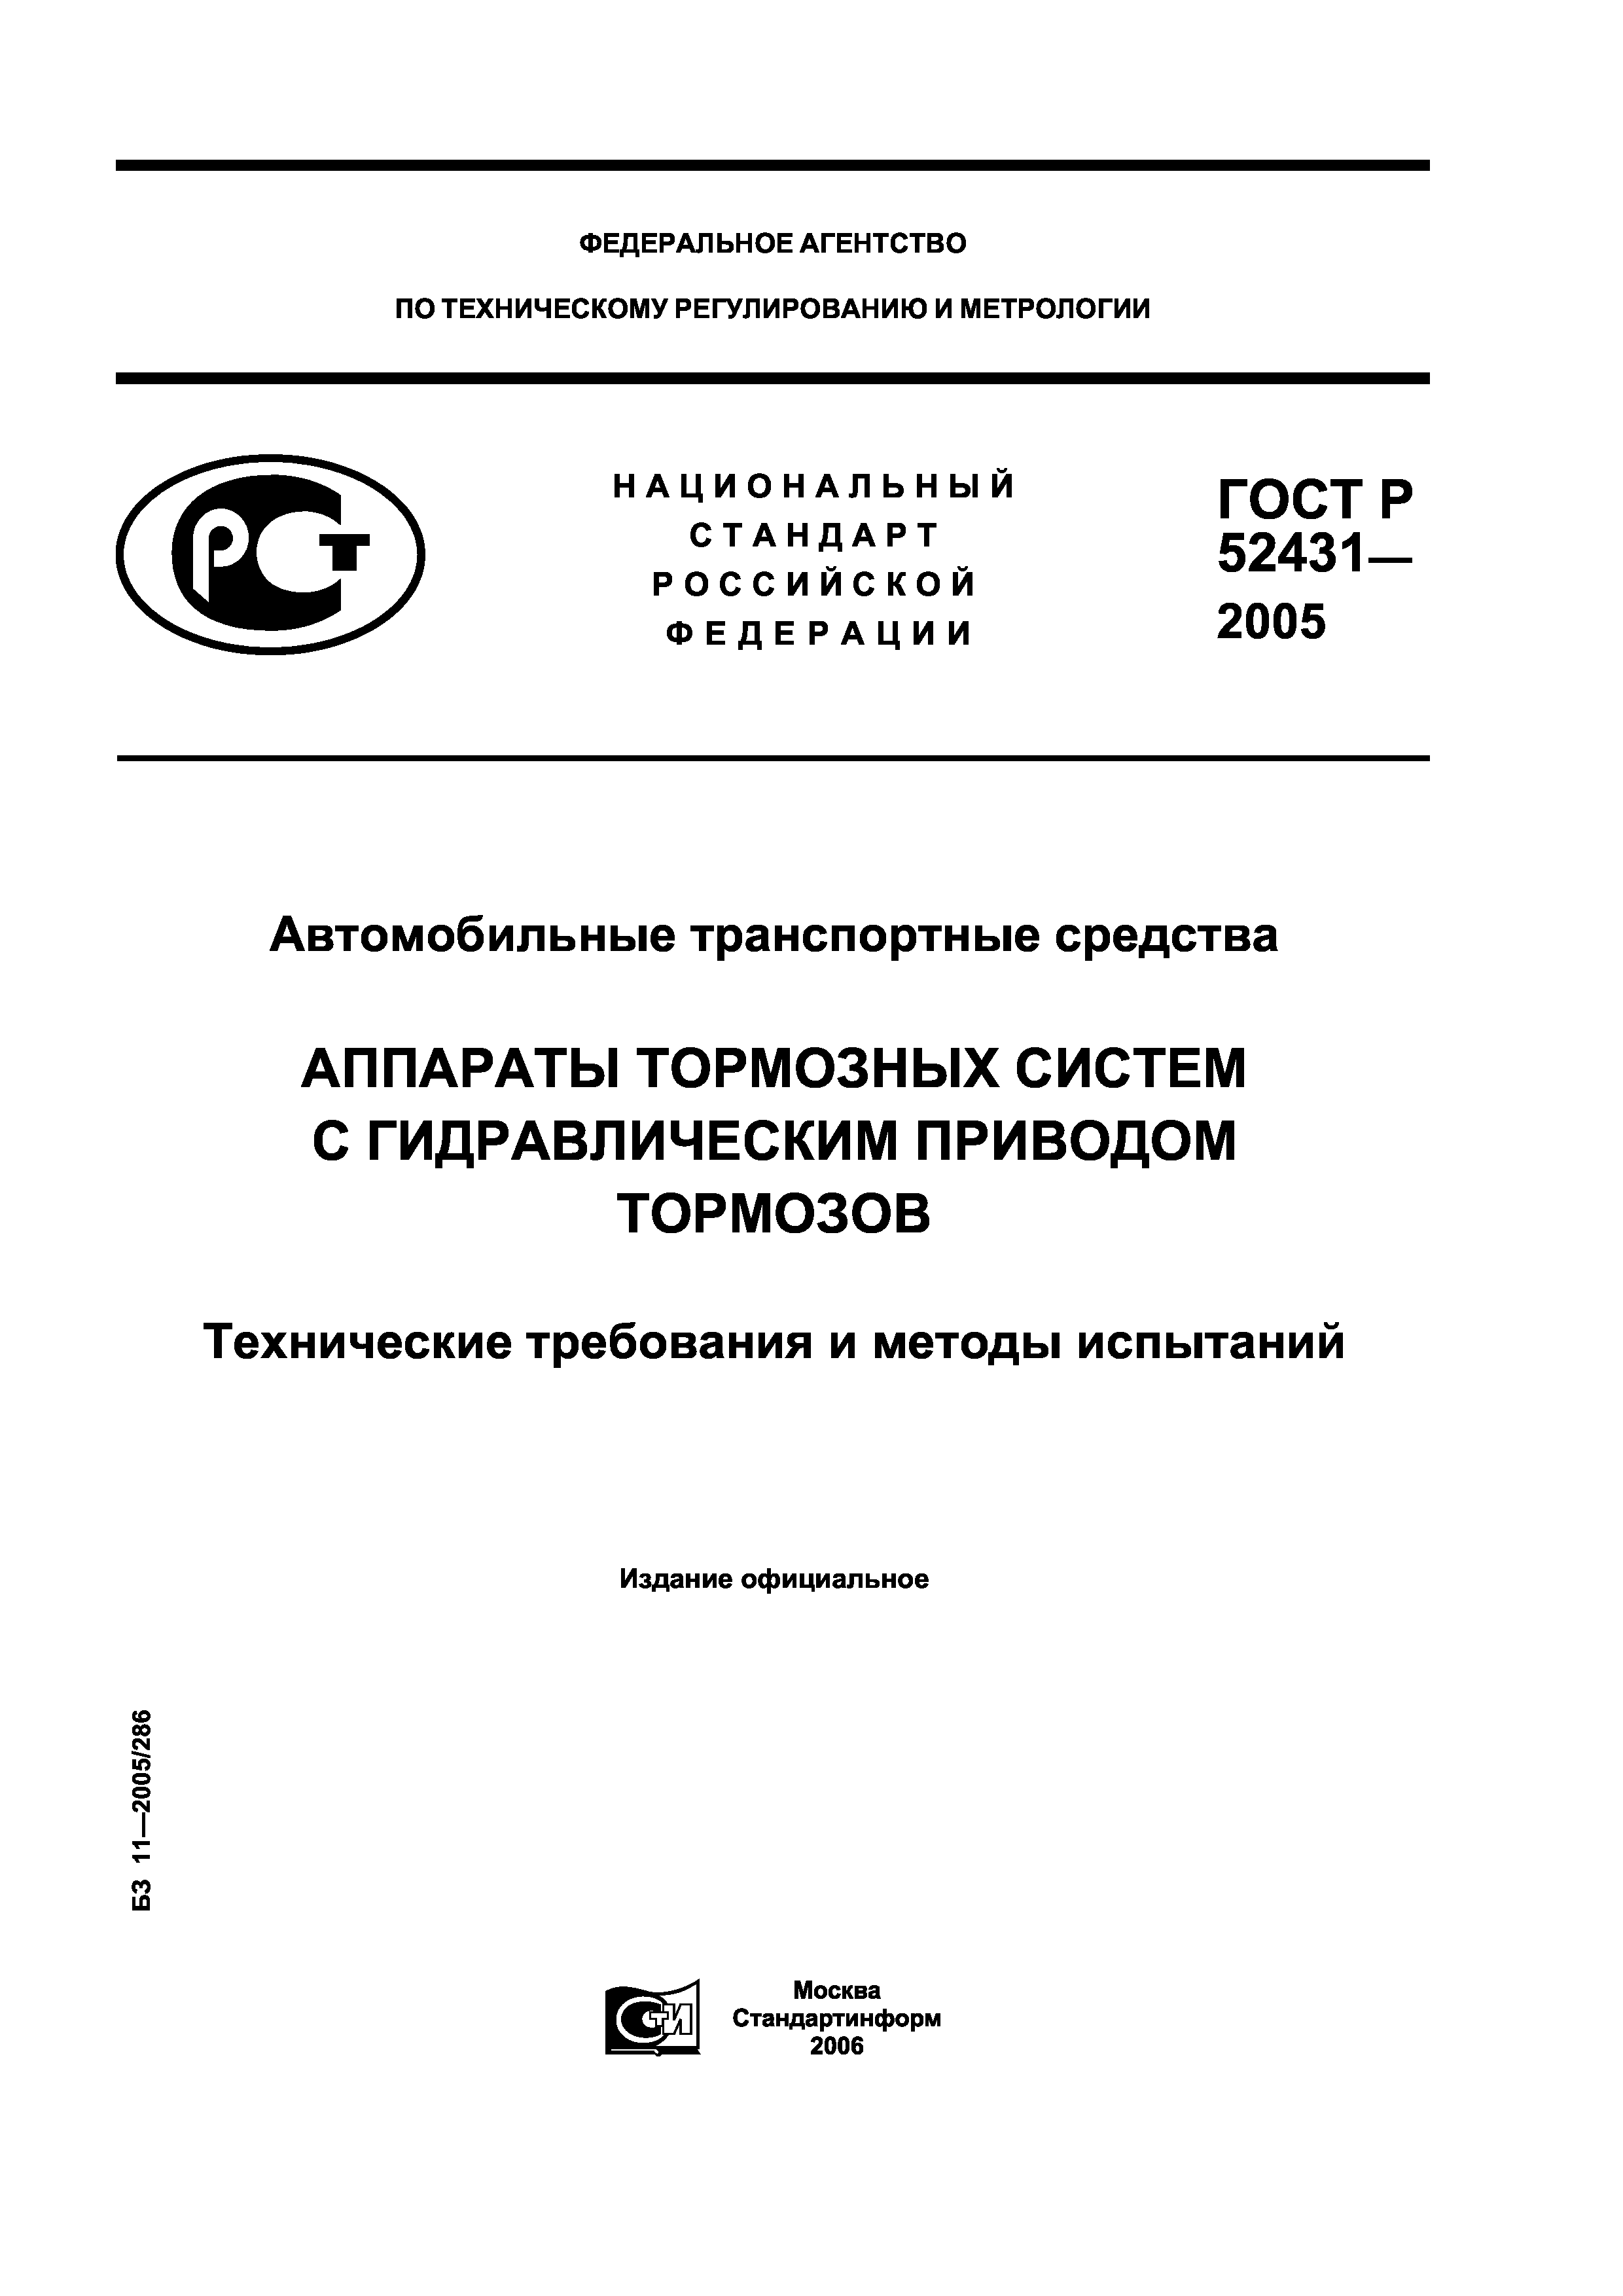 ГОСТ Р 52431-2005